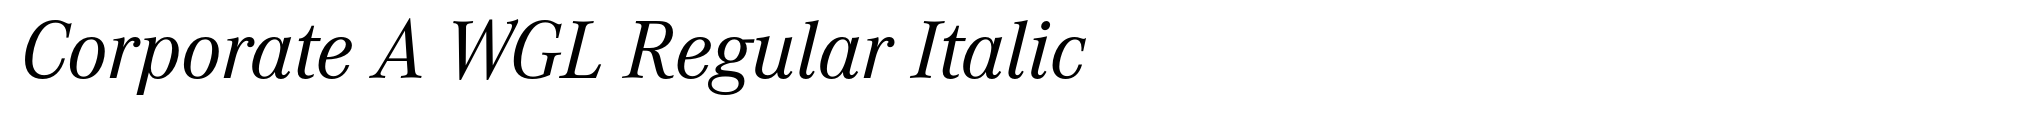 Corporate A WGL Regular Italic image